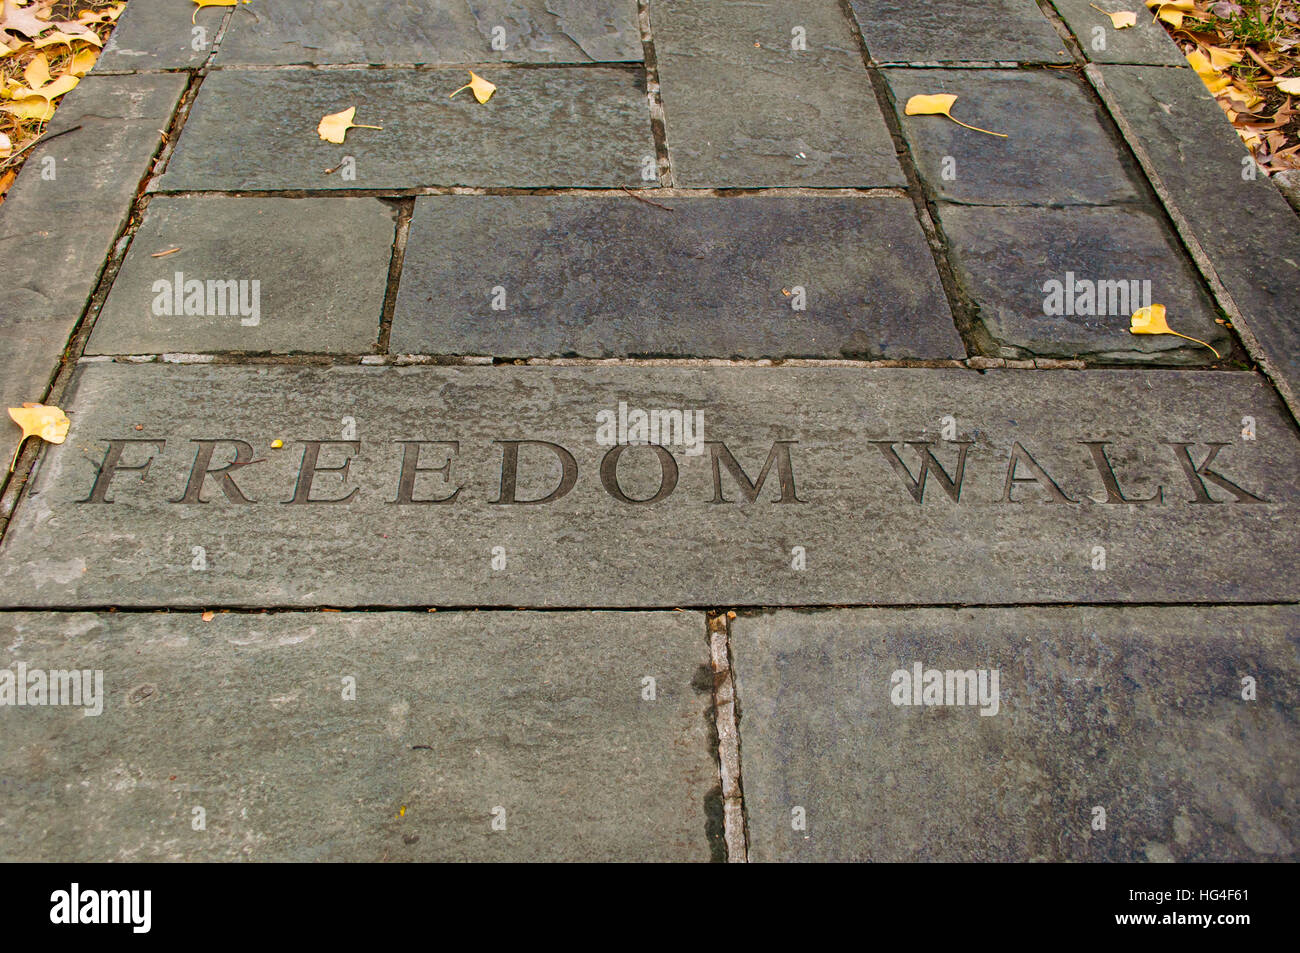 Freedom Walk in Kelly Ingram Park Birmingham Alabama USA Stock Photo